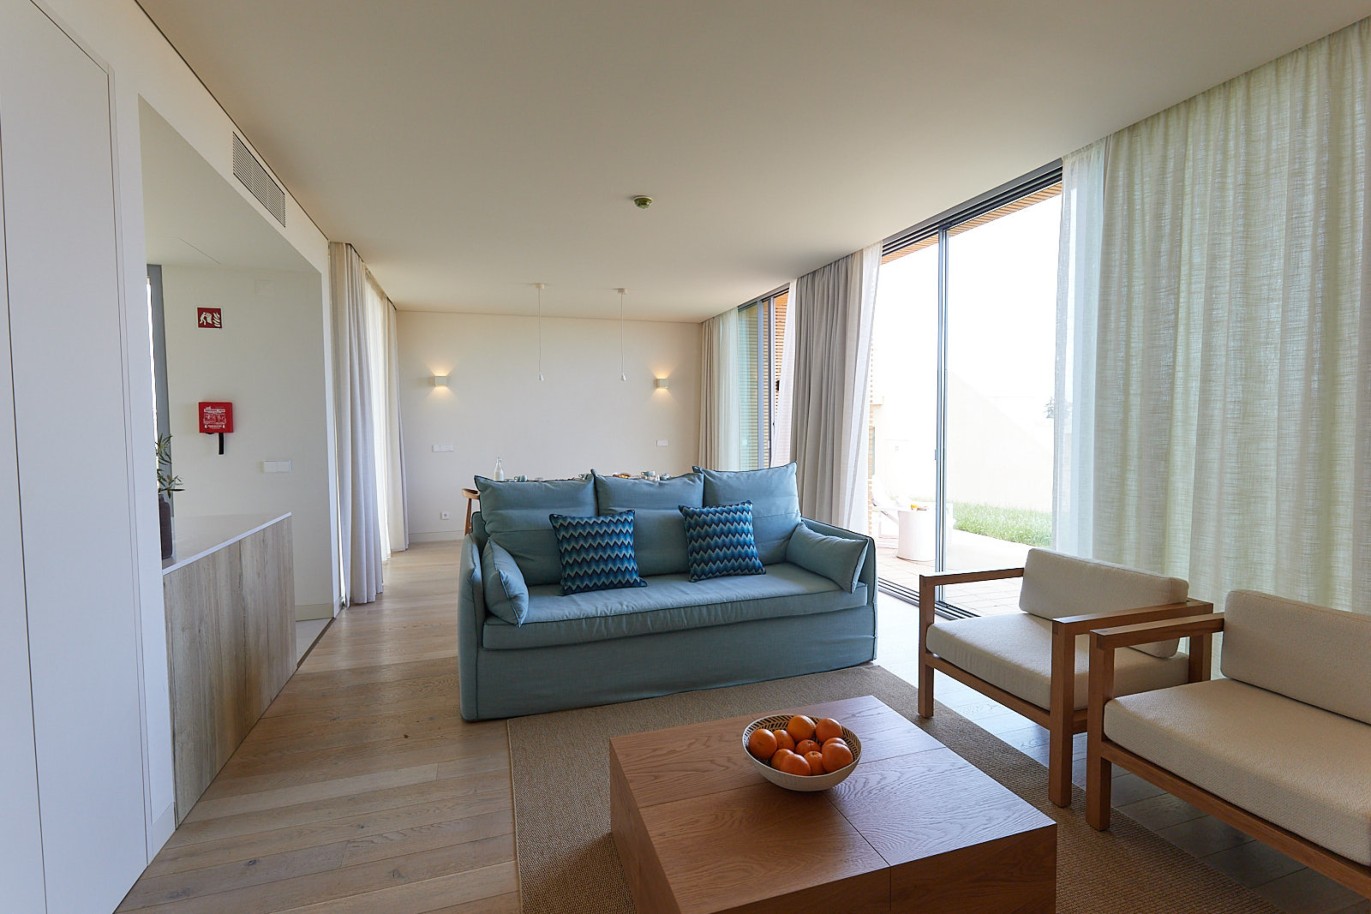 2 bedroom apartment in resort, for sale in Porches, Algarve_229159